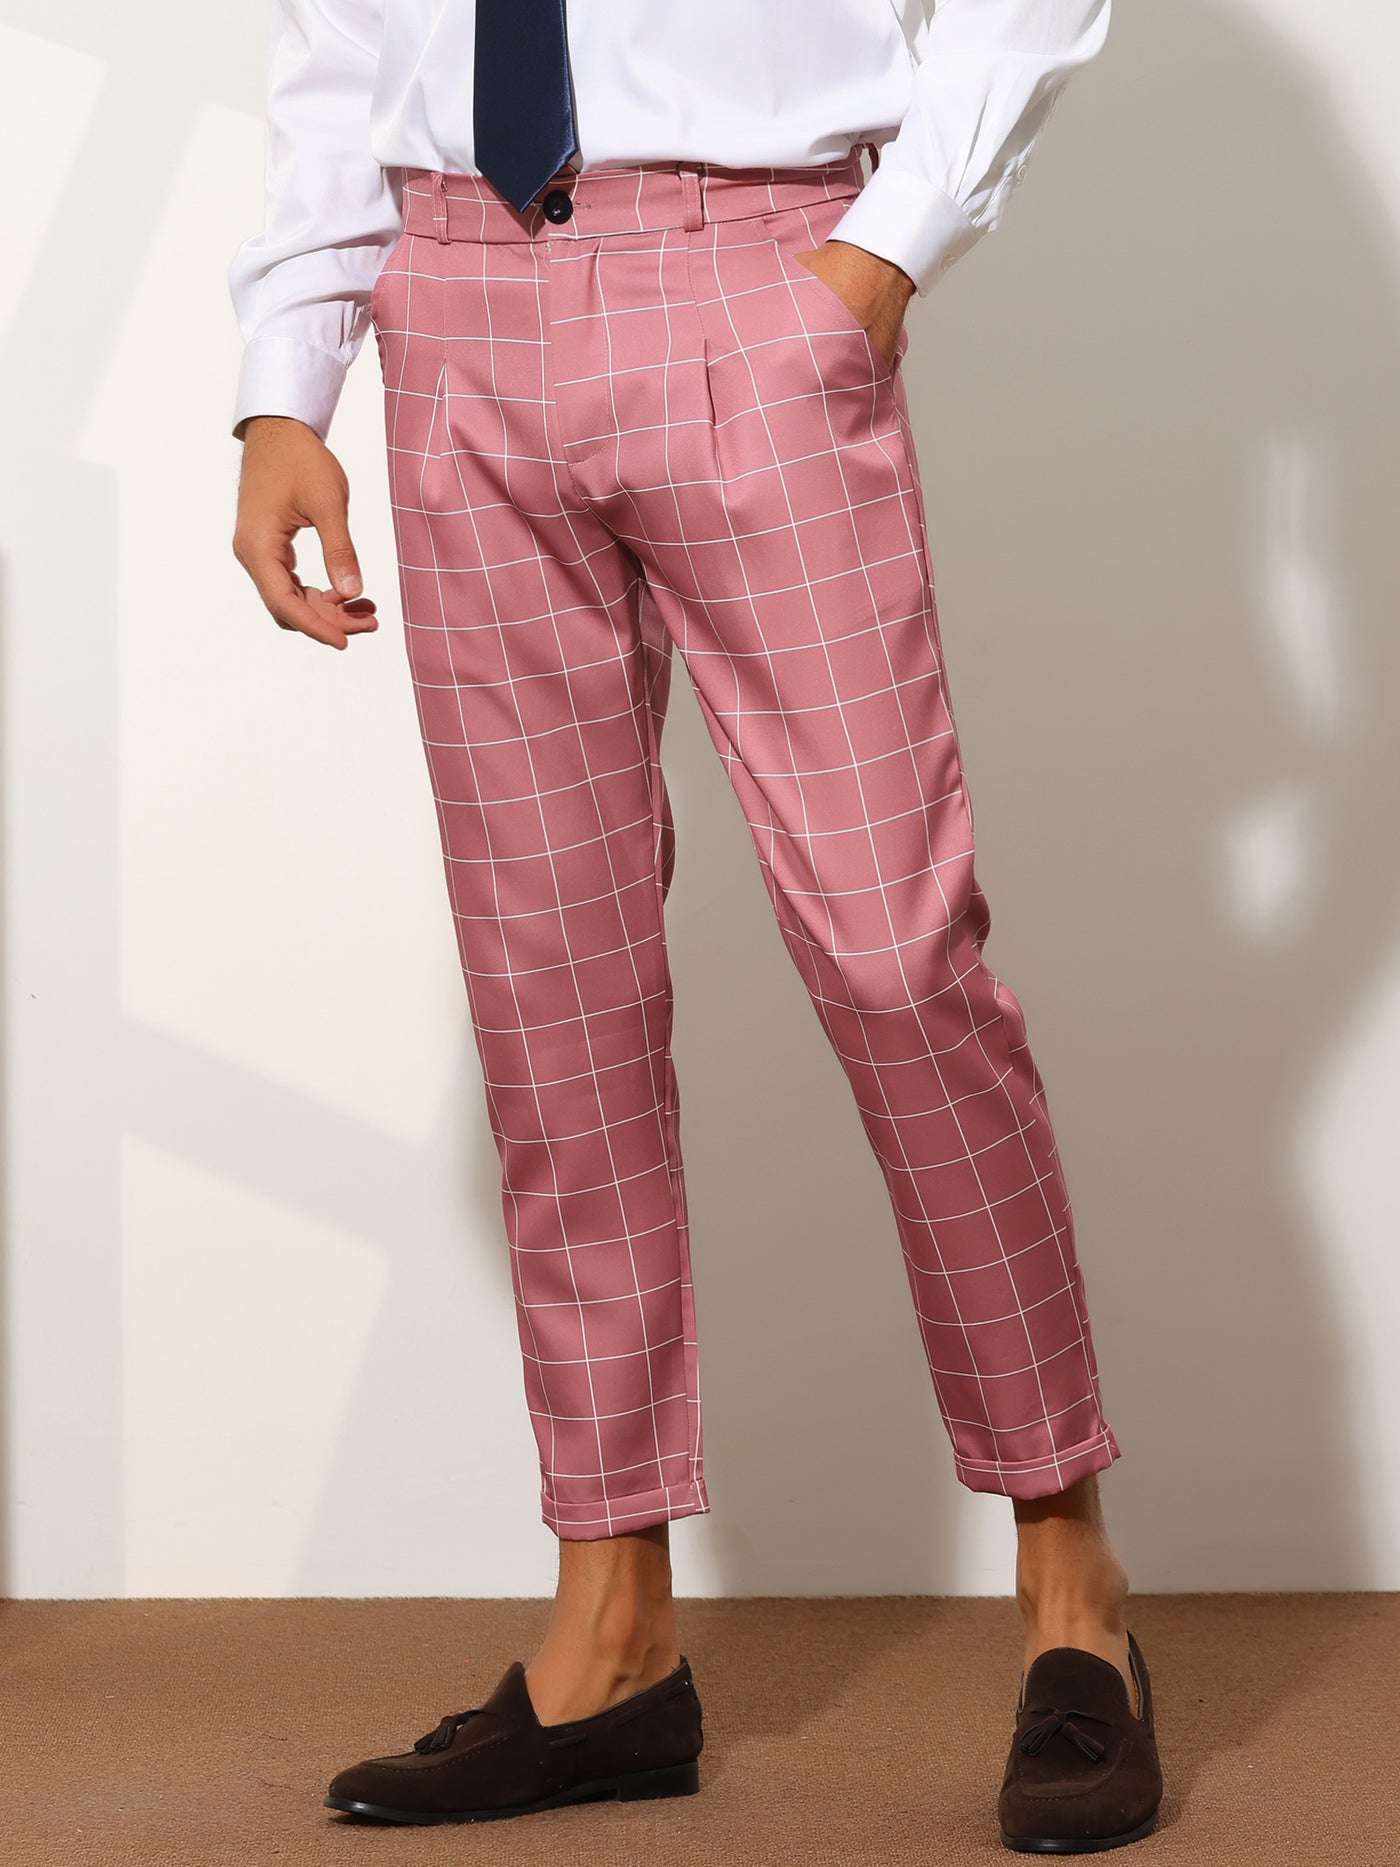 Bublédon Plaid Dress Pants for Men's Cropped Ankle Length Business Trousers